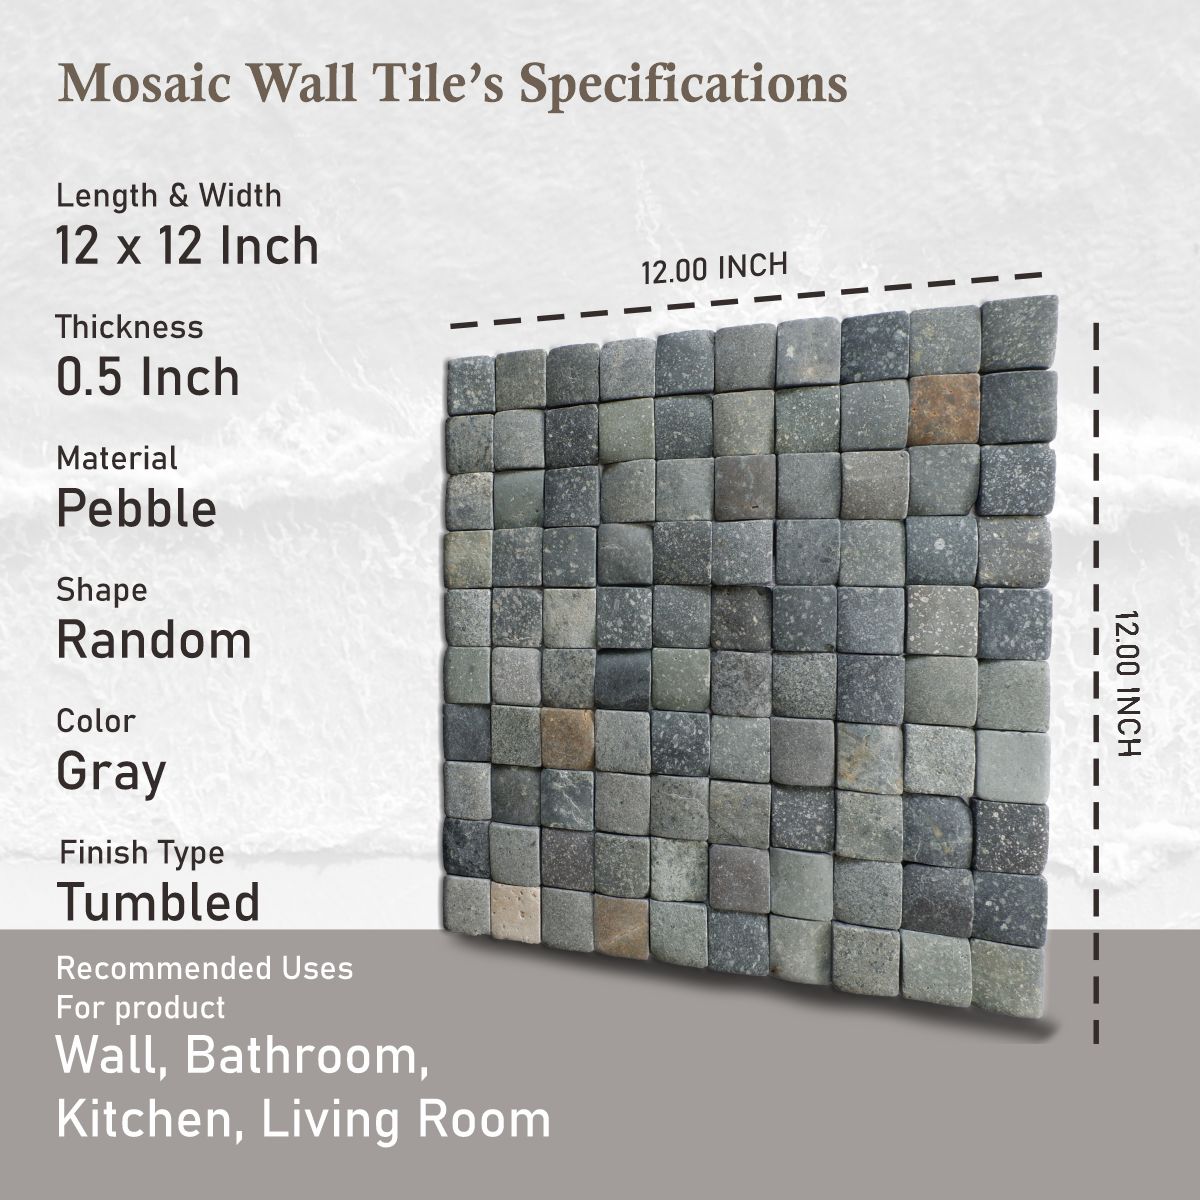 Square Stone Mosaic Tile, Molar 3 Mixed Stone Floor Tile